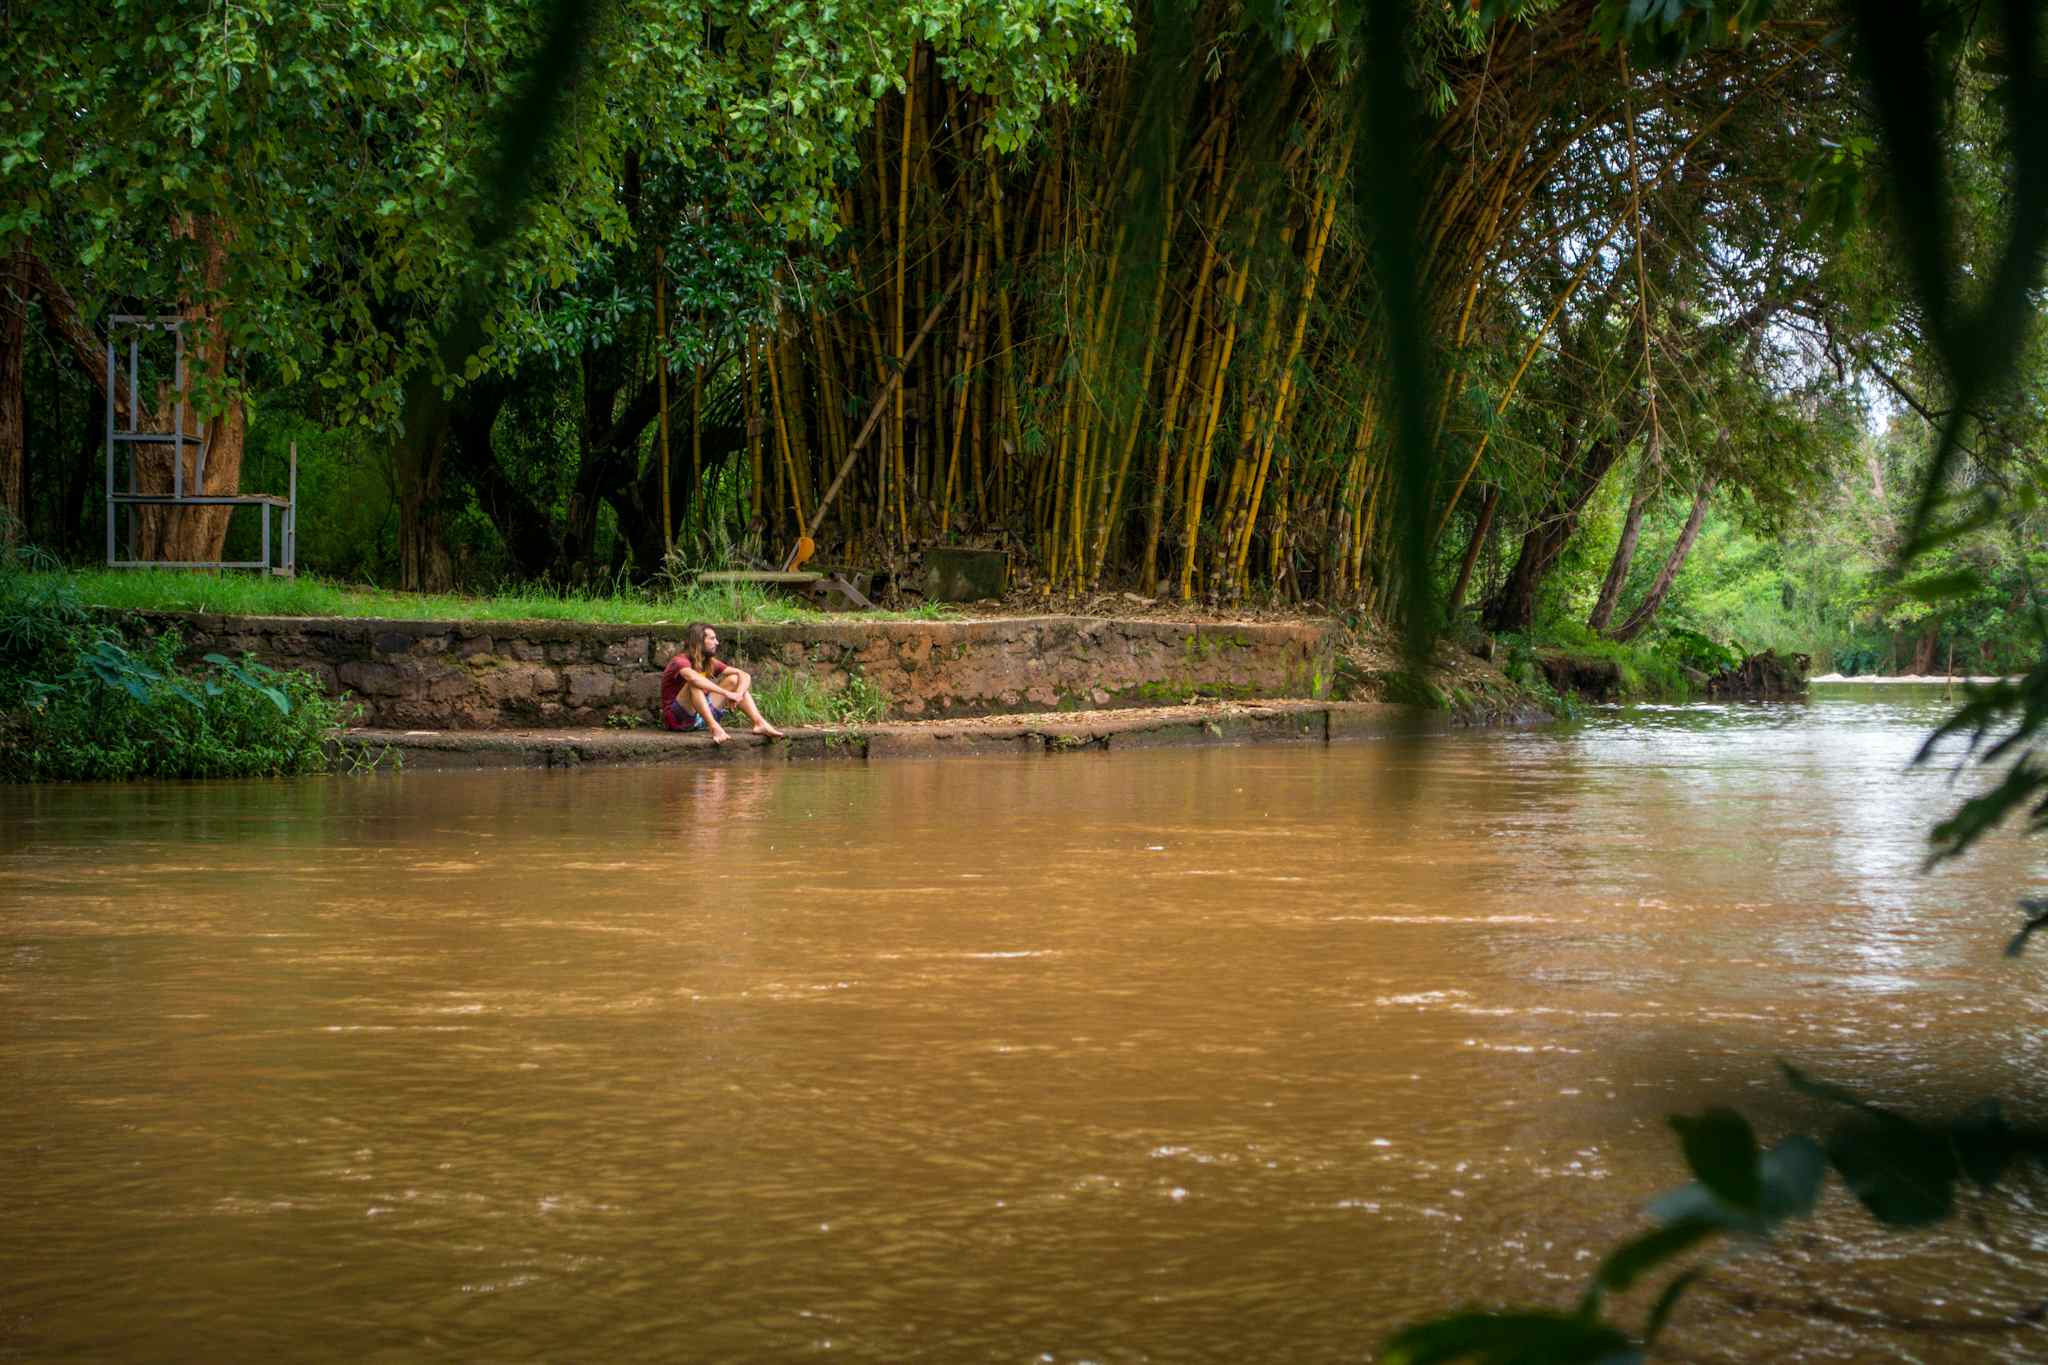 Tana River, Kenya. Image: Host/Savage Wilderness Camp